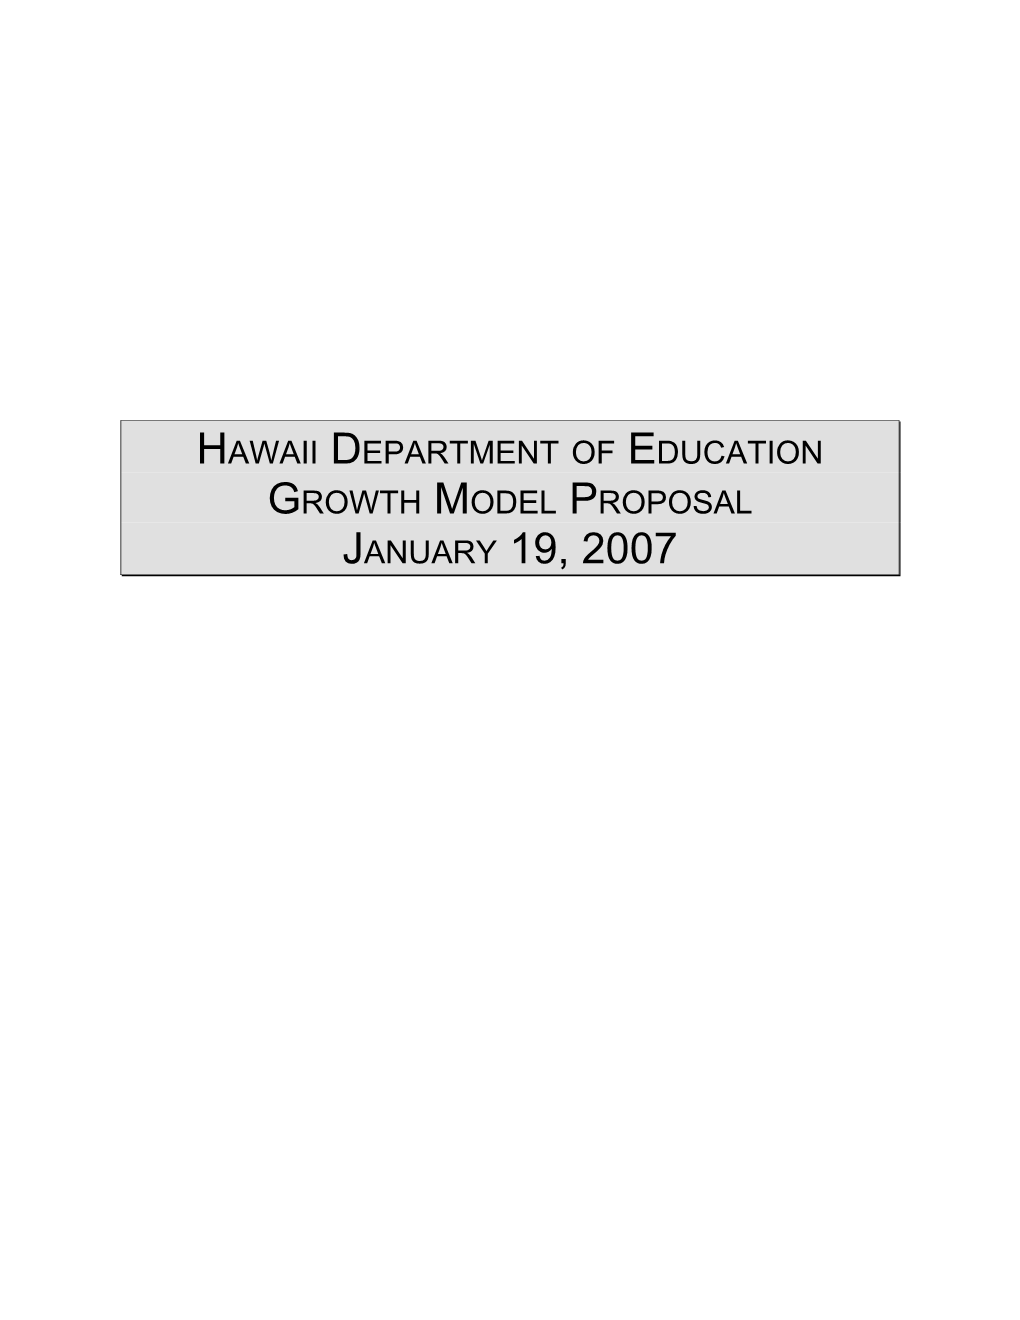 Hawaii Growth Model Proposal January 2007 (MS WORD)